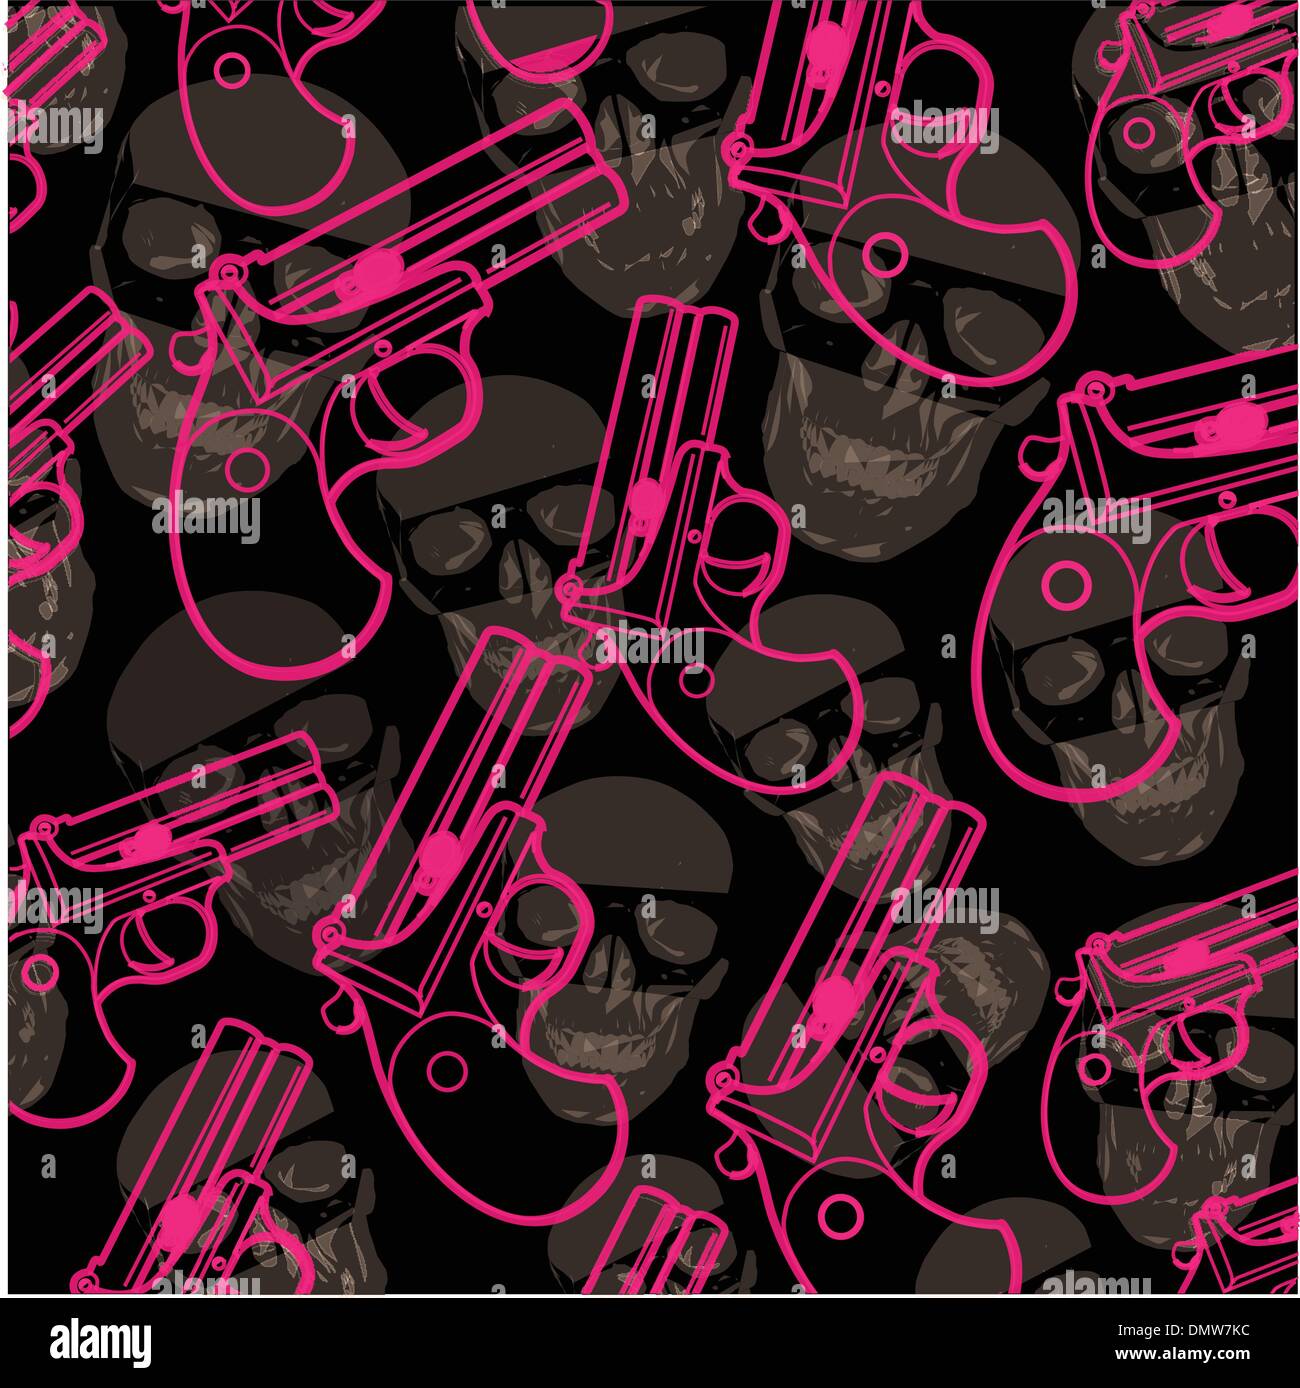 guns and skulls on black background Stock Vector